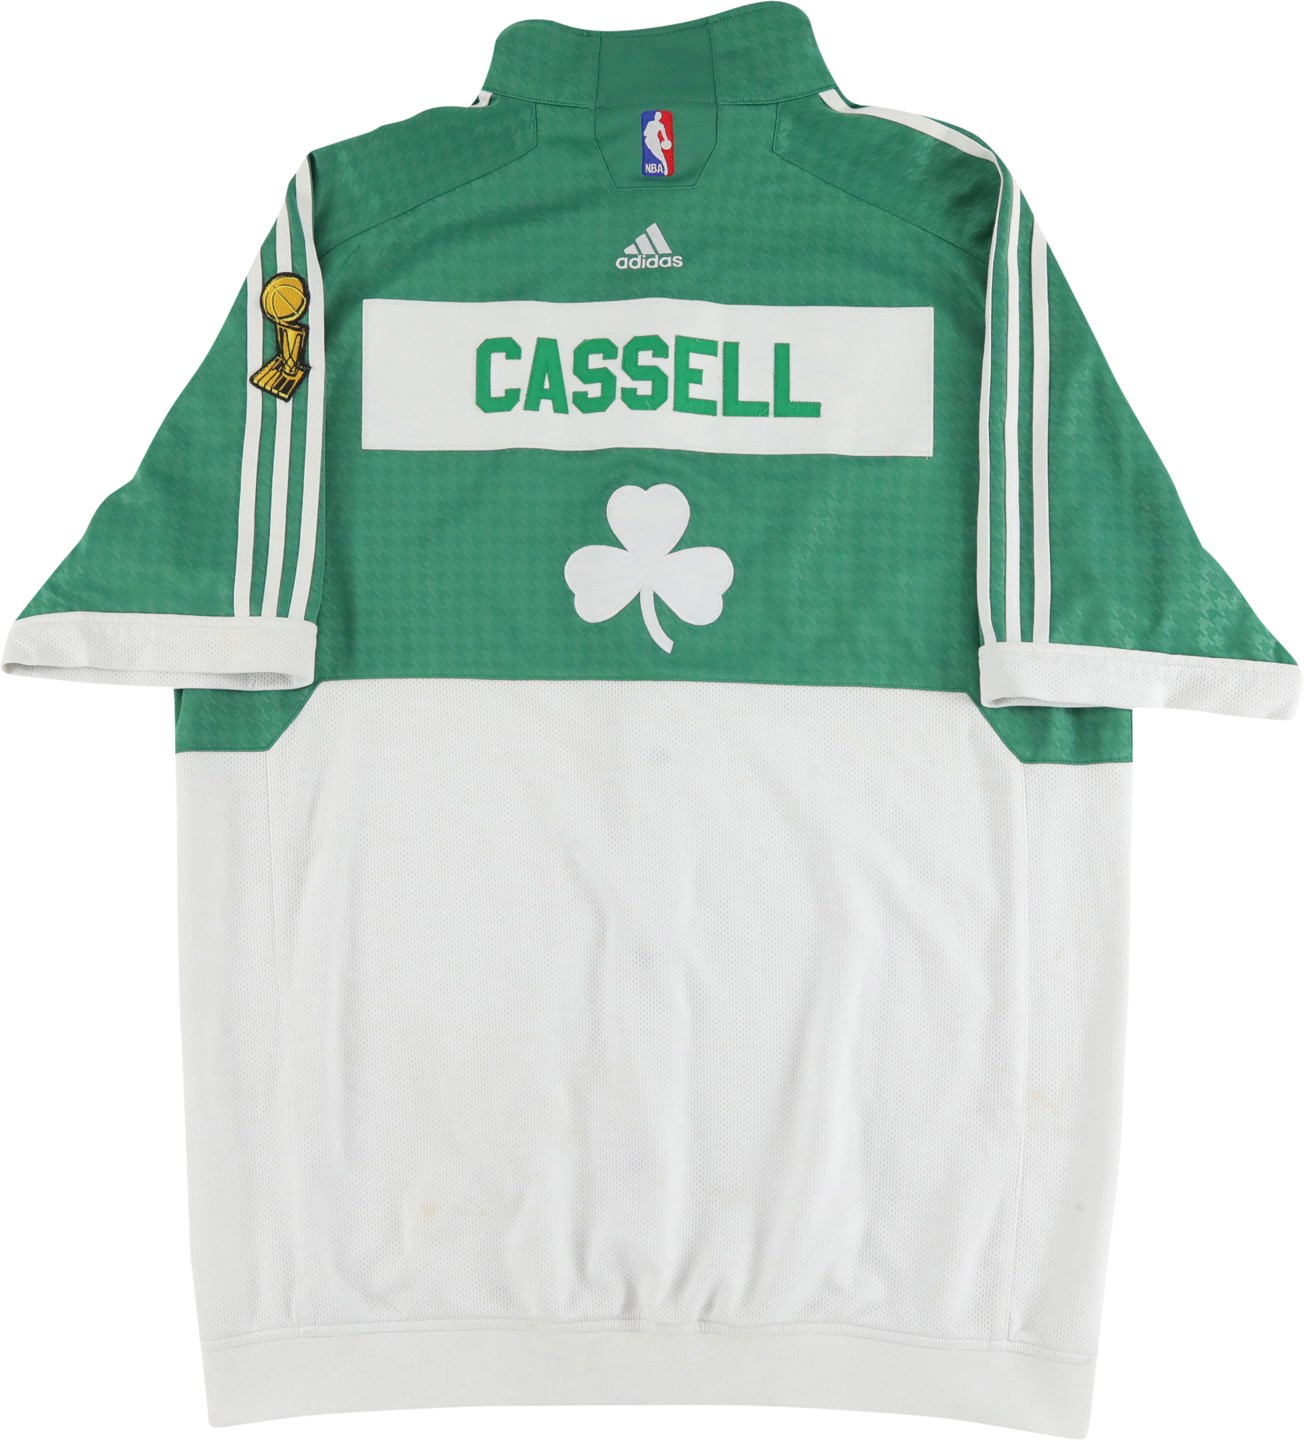 - 2008 Sam Cassell Boston Celtics NBA Finals Warm-Up Jacket